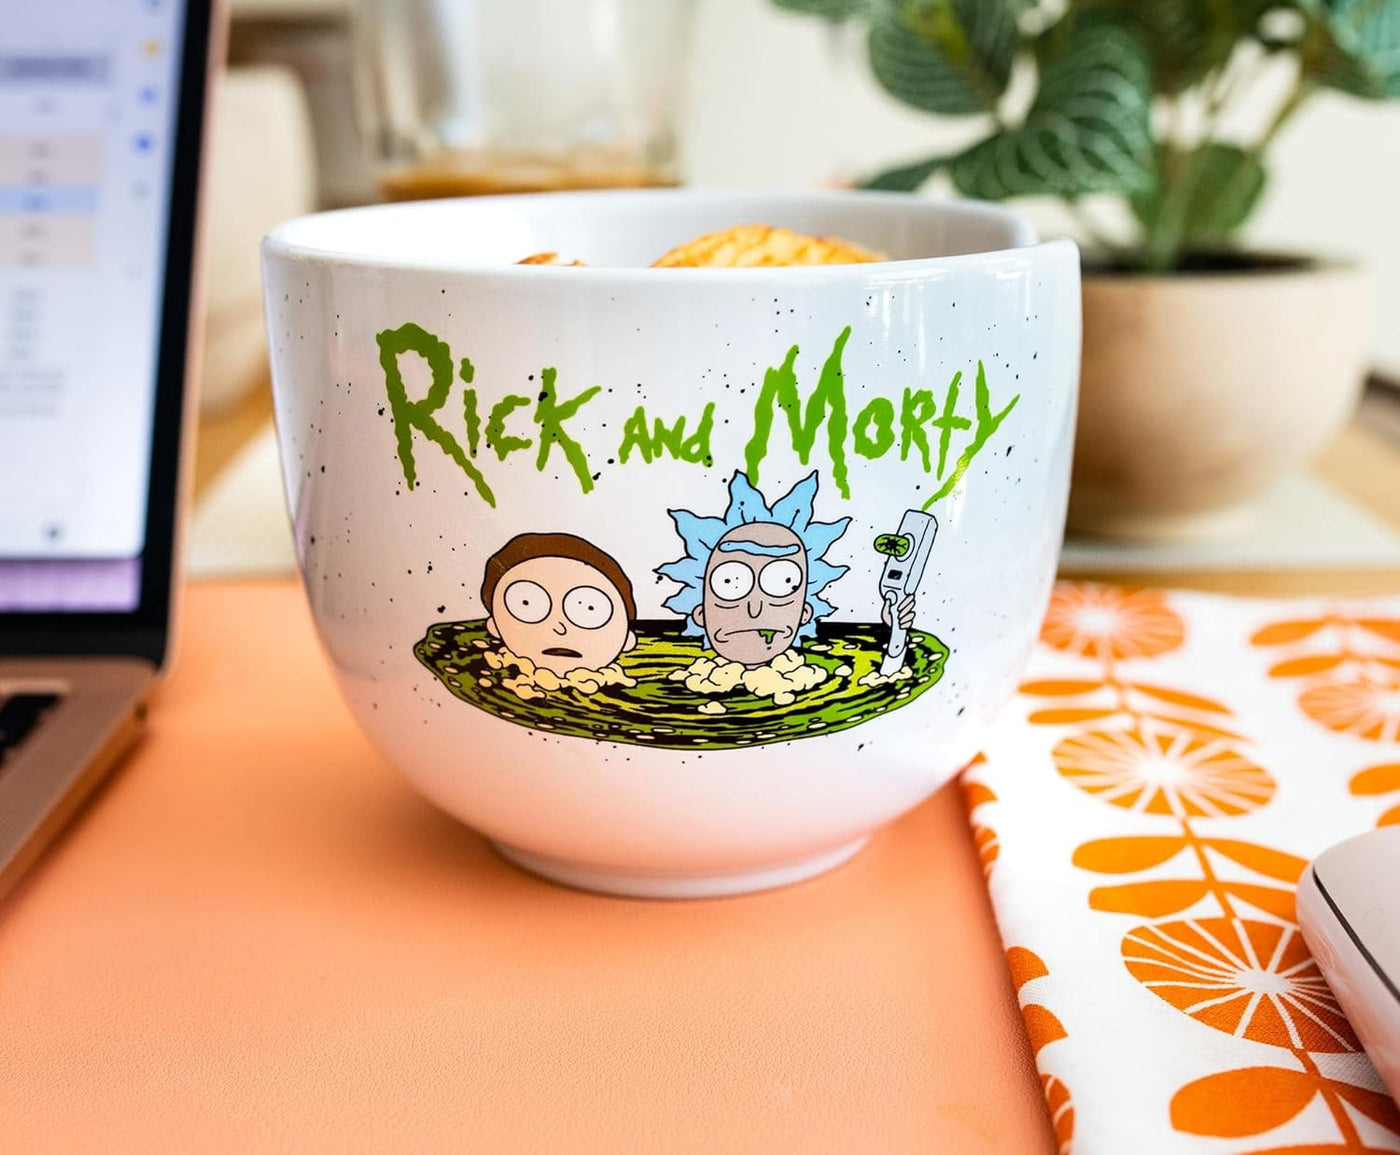 Rick and Morty Portal Ramen Noodle Bowl and Wooden Chopsticks